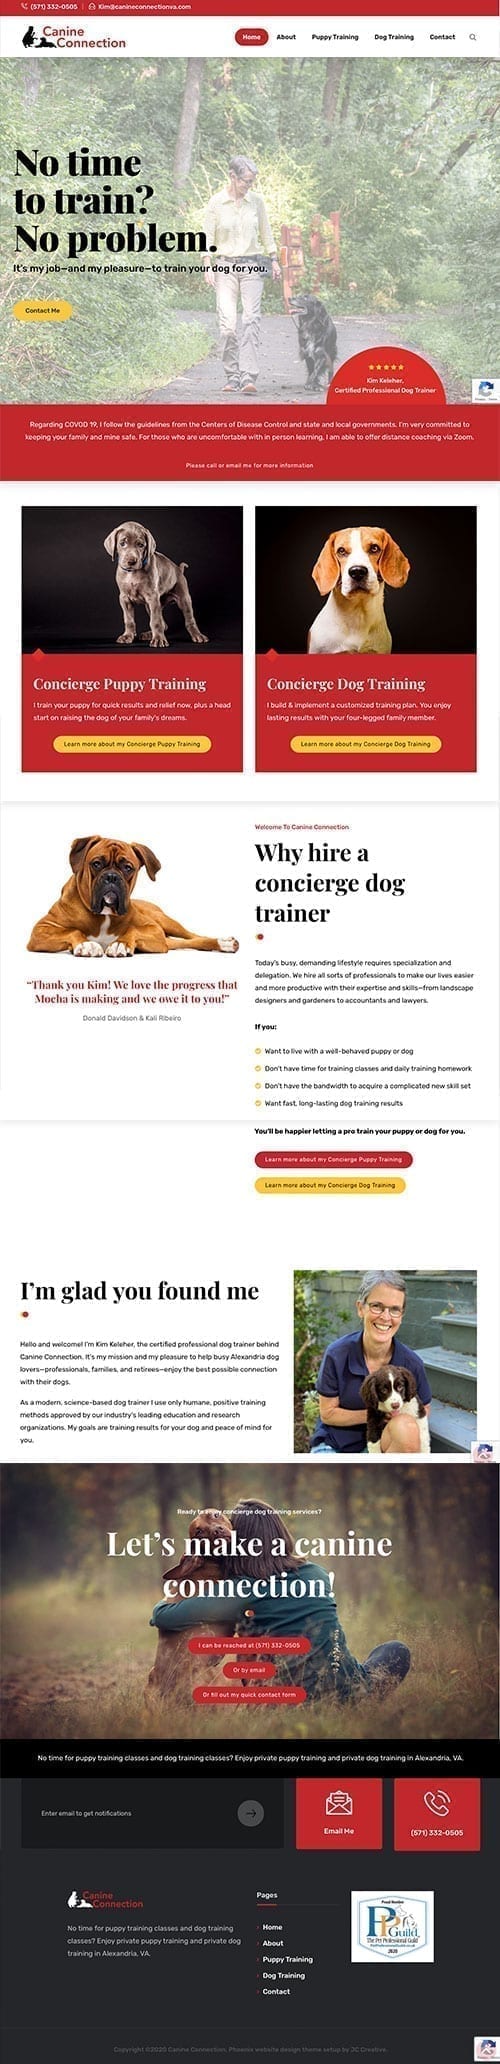 Concierge dog trainer website design